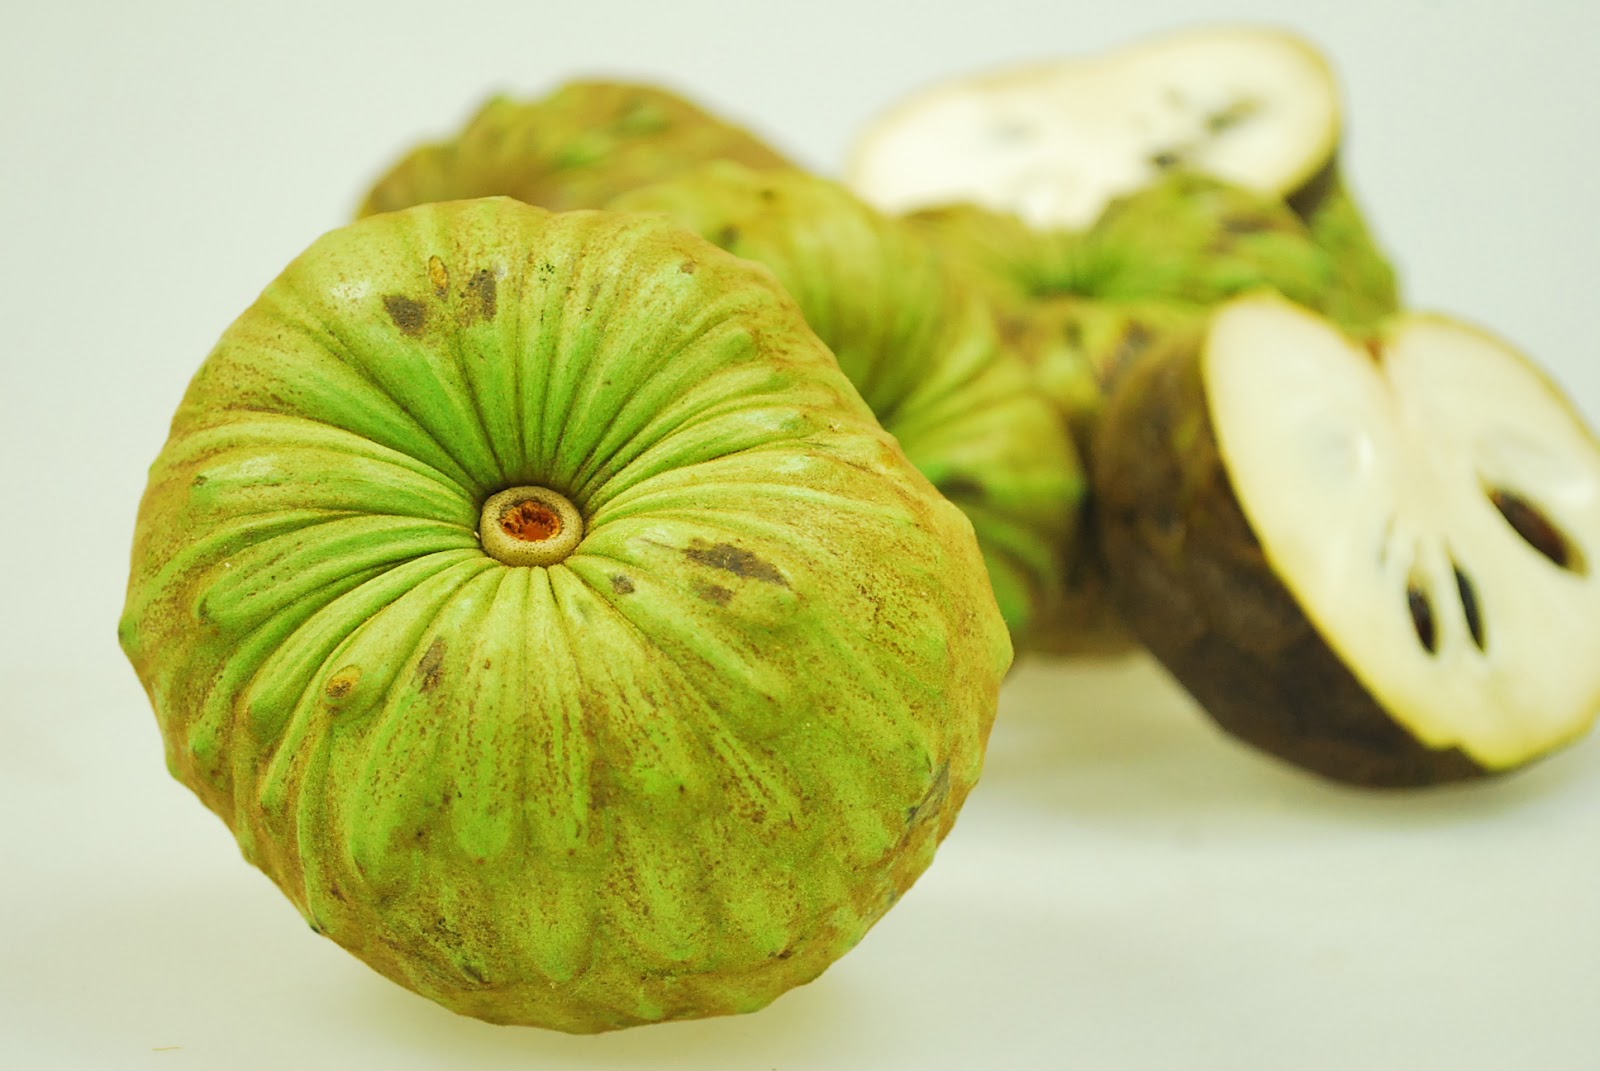 The fruits is tasty. Черимойя. Черимойя фрукт. Овощ похожий на шишку зеленого цвета. Овощ похожий на яблоко.